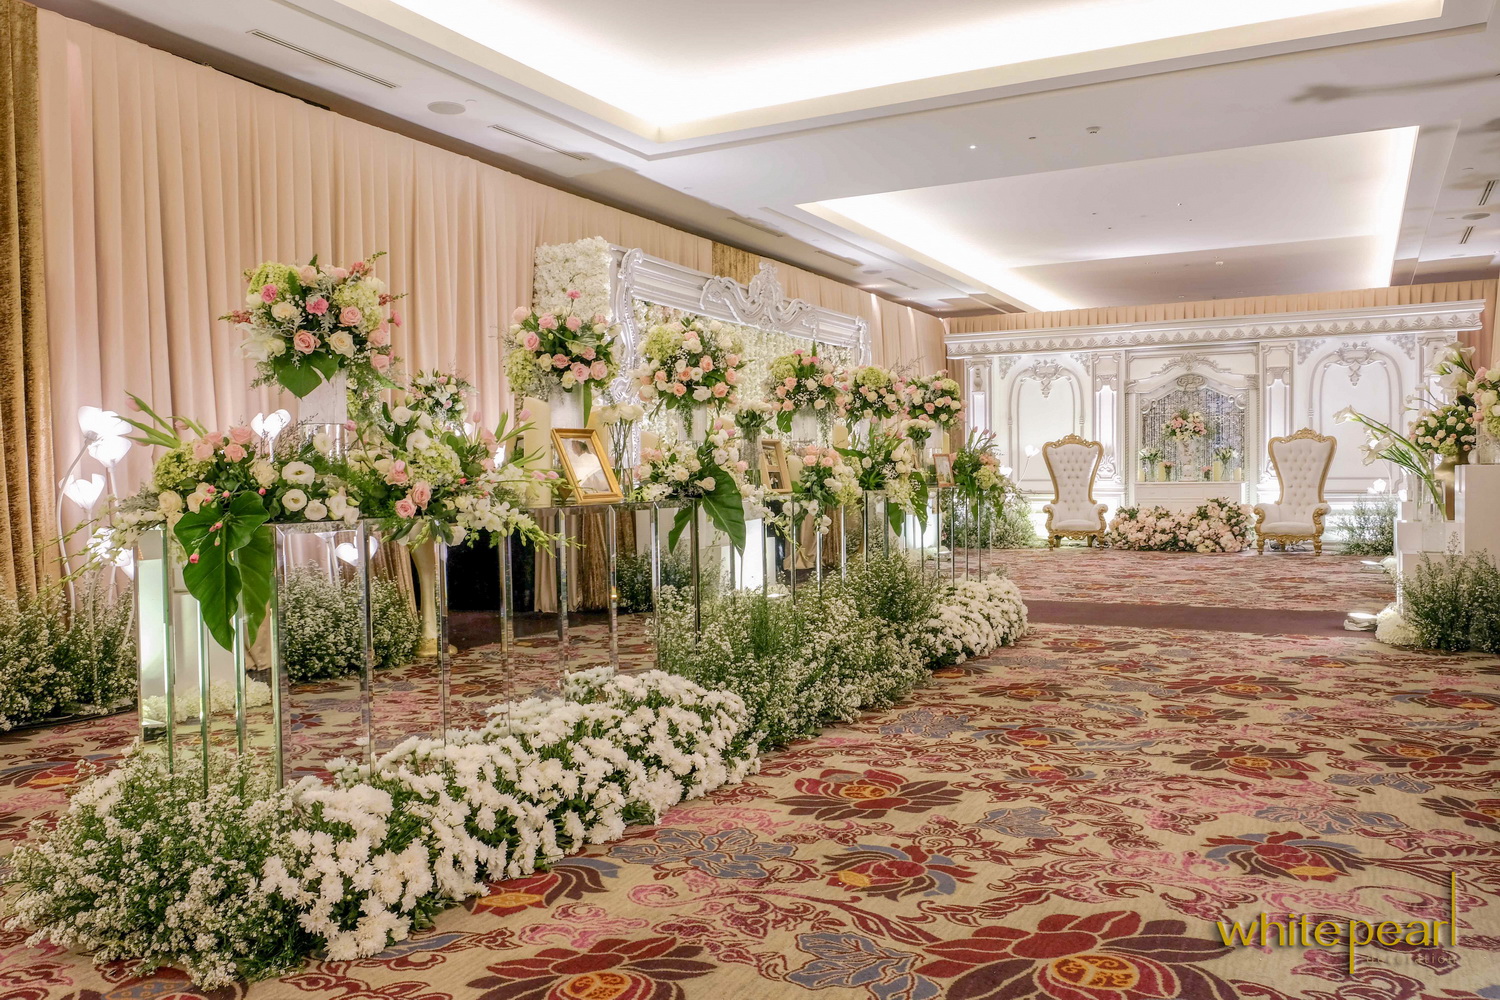 White Pearl Decoration Fairmont Jakarta 2019 01 26